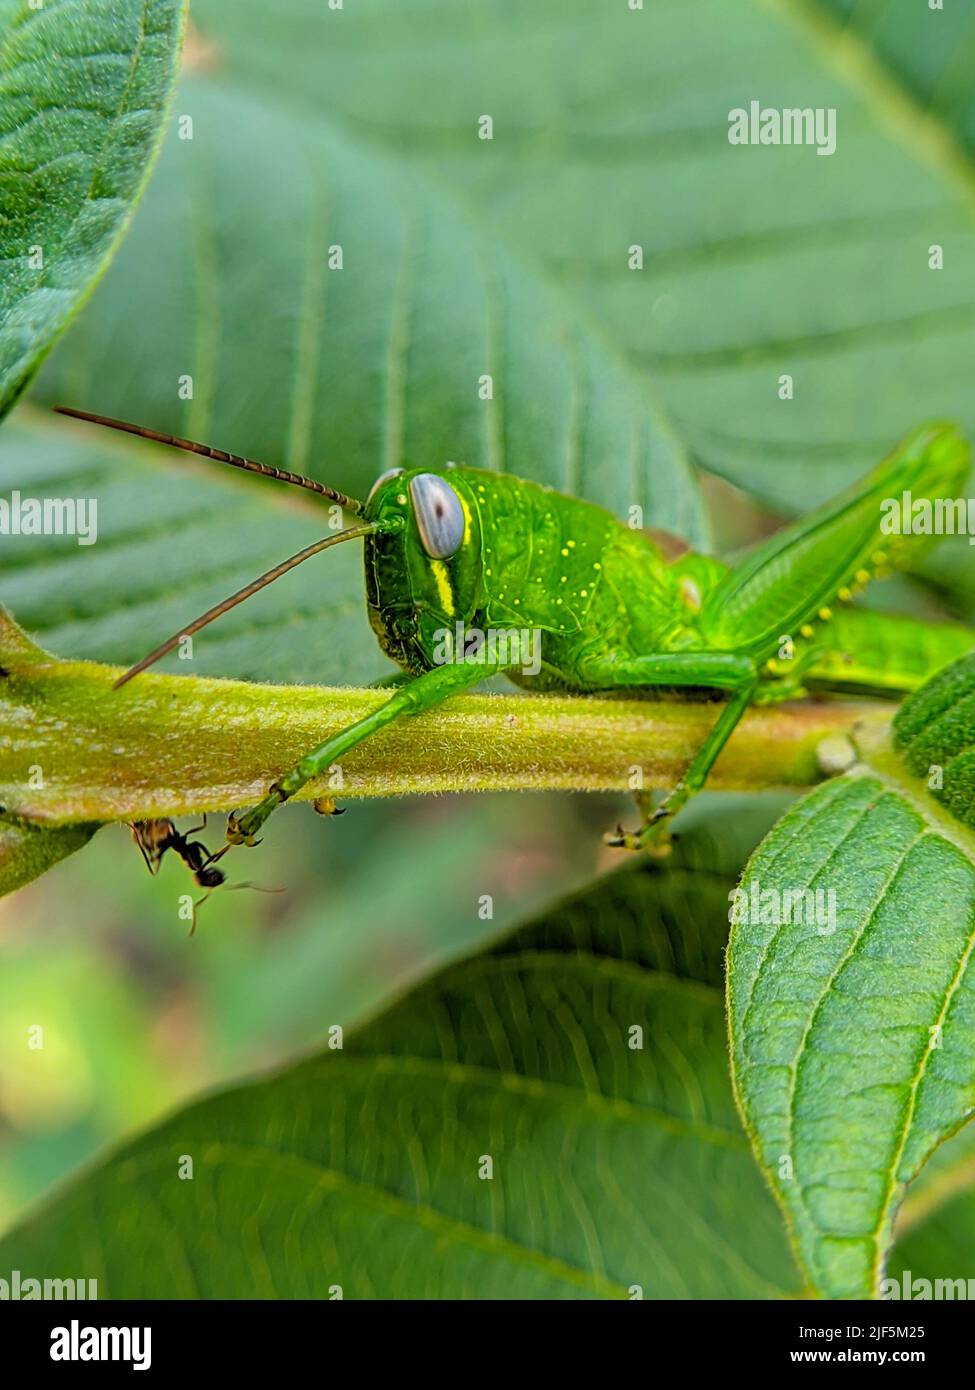 close up photo ar macro photo of green grasshopper on leaf Stock Photo